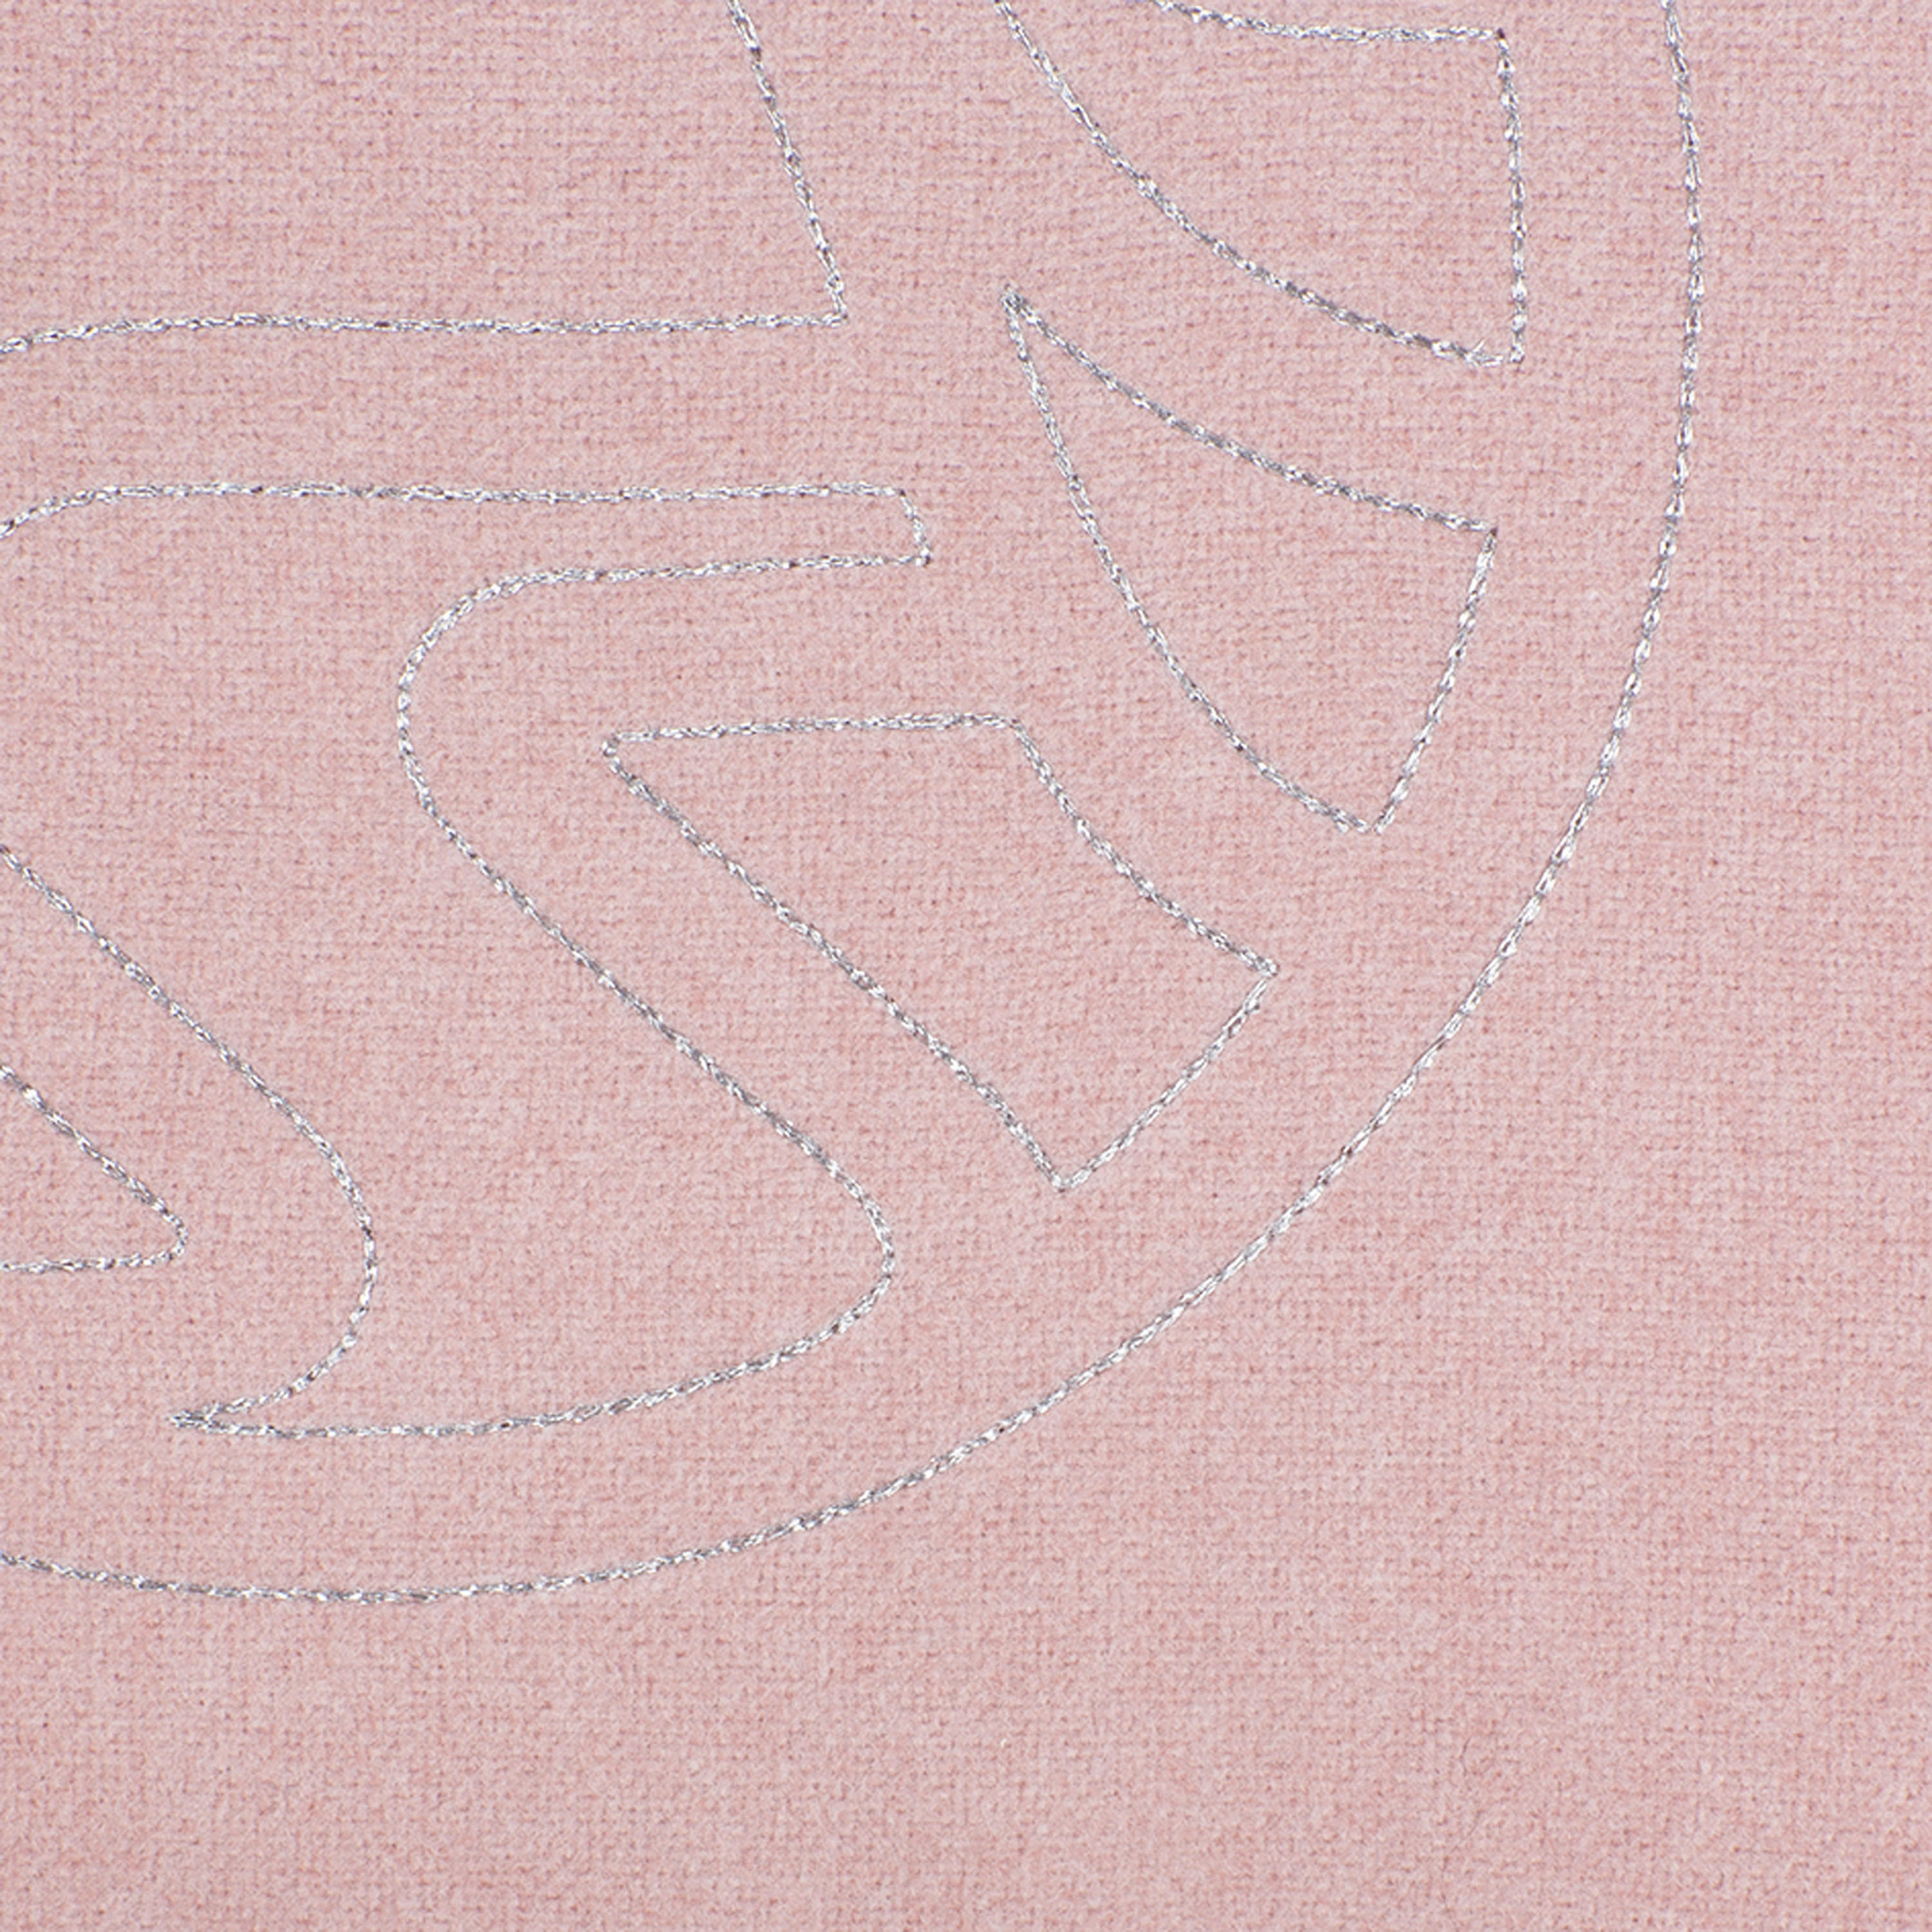 KISSENHÜLLE Softskills 40/60 cm  - Rosa, Design, Textil (40/60cm) - Sportalm Kitzbühel